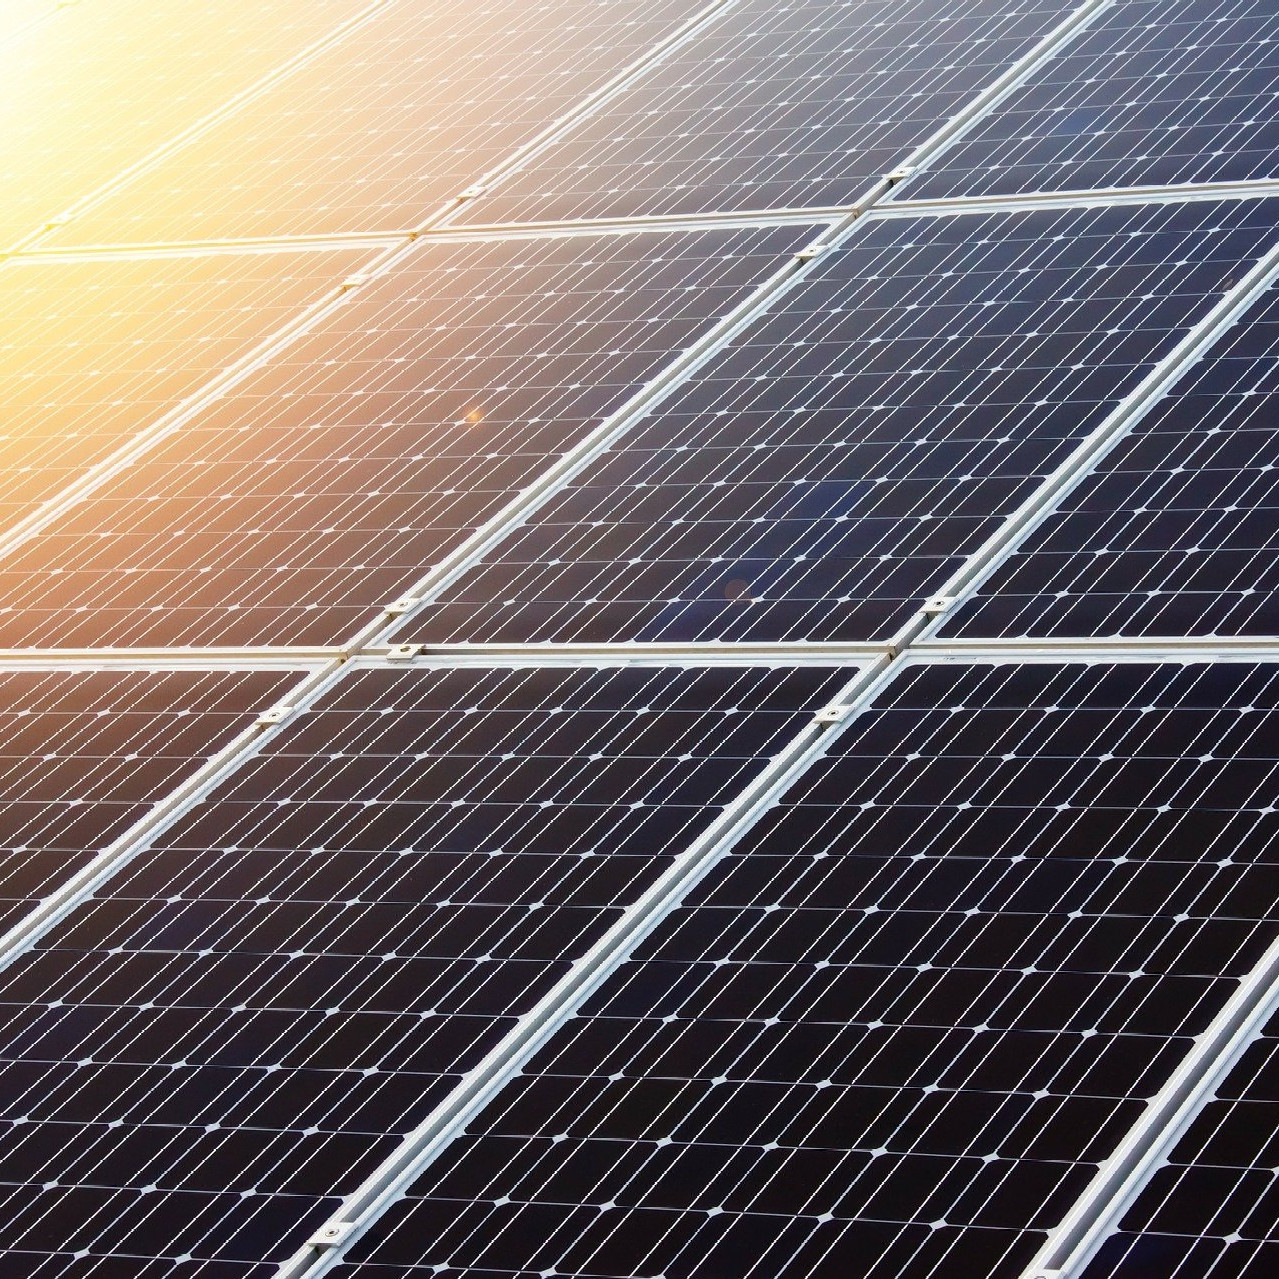 Photo of solar PV panels